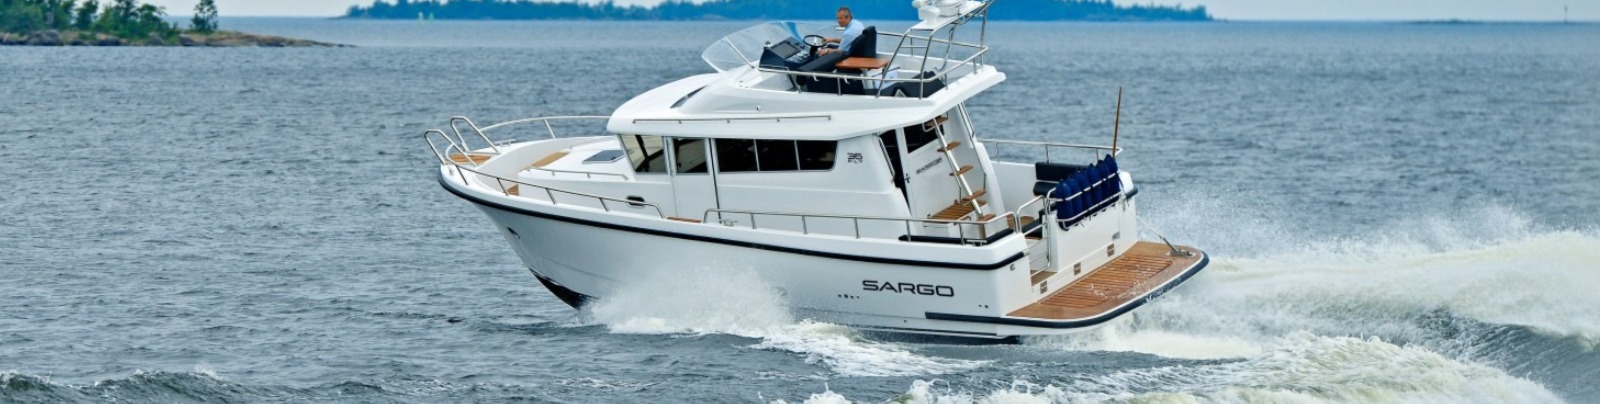 Sargo Boats | Website design for wheelhouse & walkaround boat brand